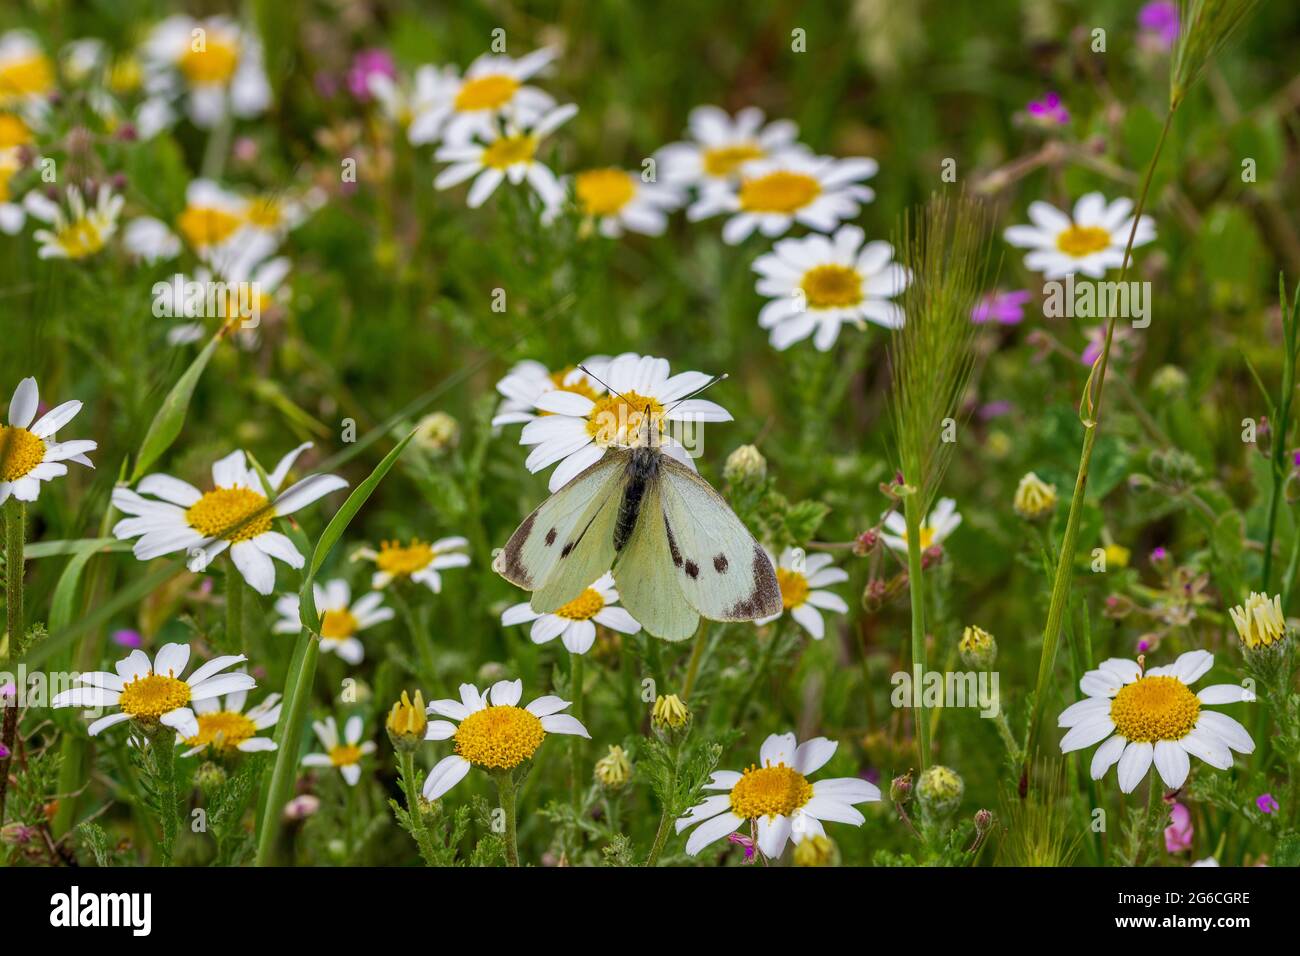 Pieris brassicae, Large White Butterfly in a Field of Wild Flowers Stock Photo